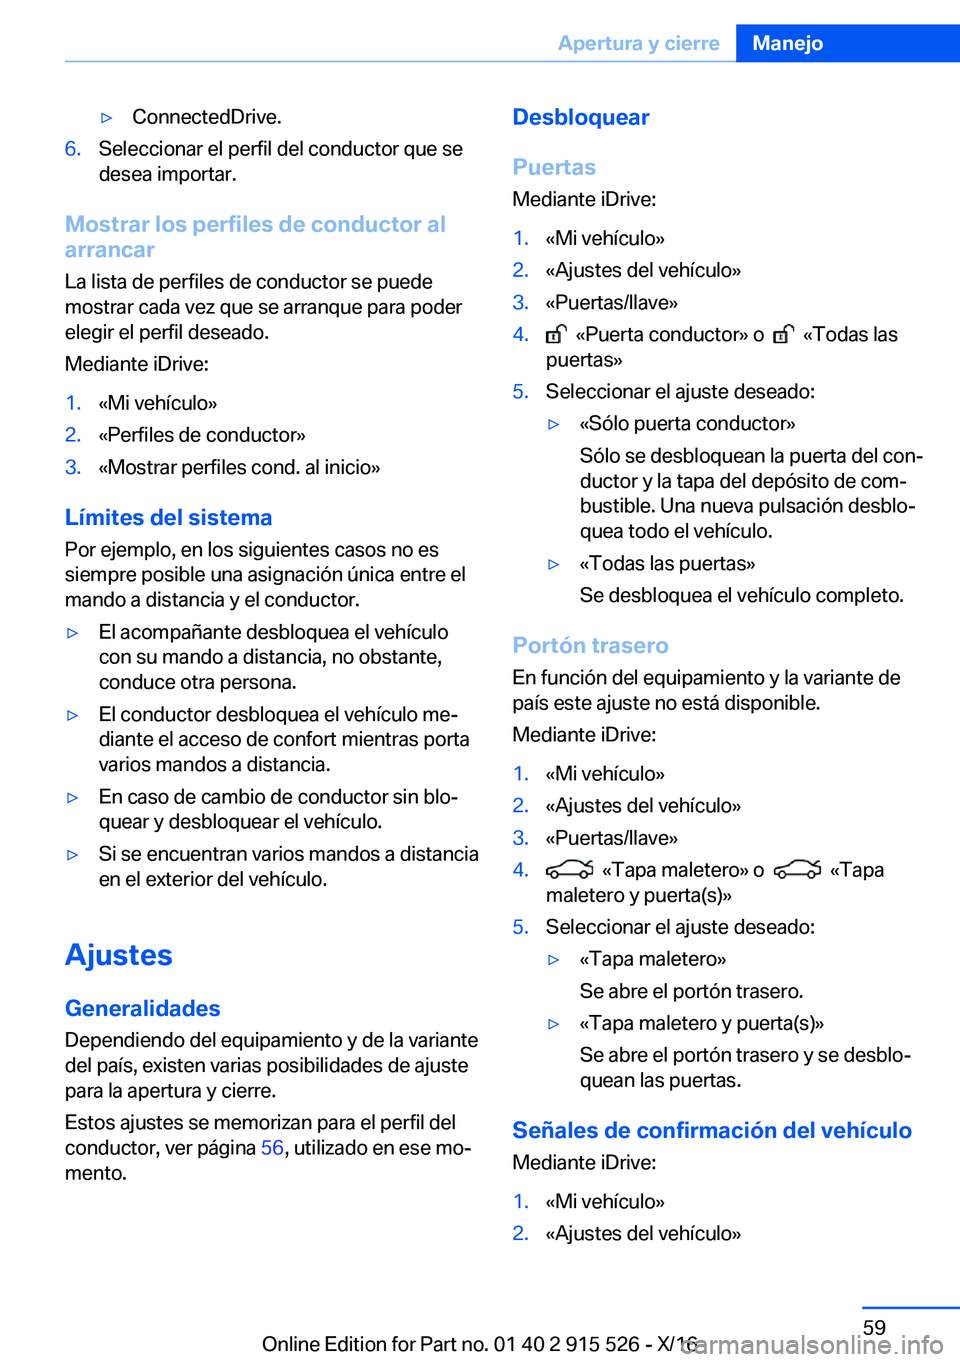 BMW X5 2017  Manuales de Empleo (in Spanish) 'y�C�o�n�n�e�c�t�e�d�D�r�i�v�e�.�6�.�S�e�l�e�c�c�i�o�n�a�r� �e�l� �p�e�r�f�i�l� �d�e�l� �c�o�n�d�u�c�t�o�r� �q�u�e� �s�e�d�e�s�e�a� �i�m�p�o�r�t�a�r�.
�M�o�s�t�r�a�r��l�o�s��p�e�r�f�i�l�e�s��d�